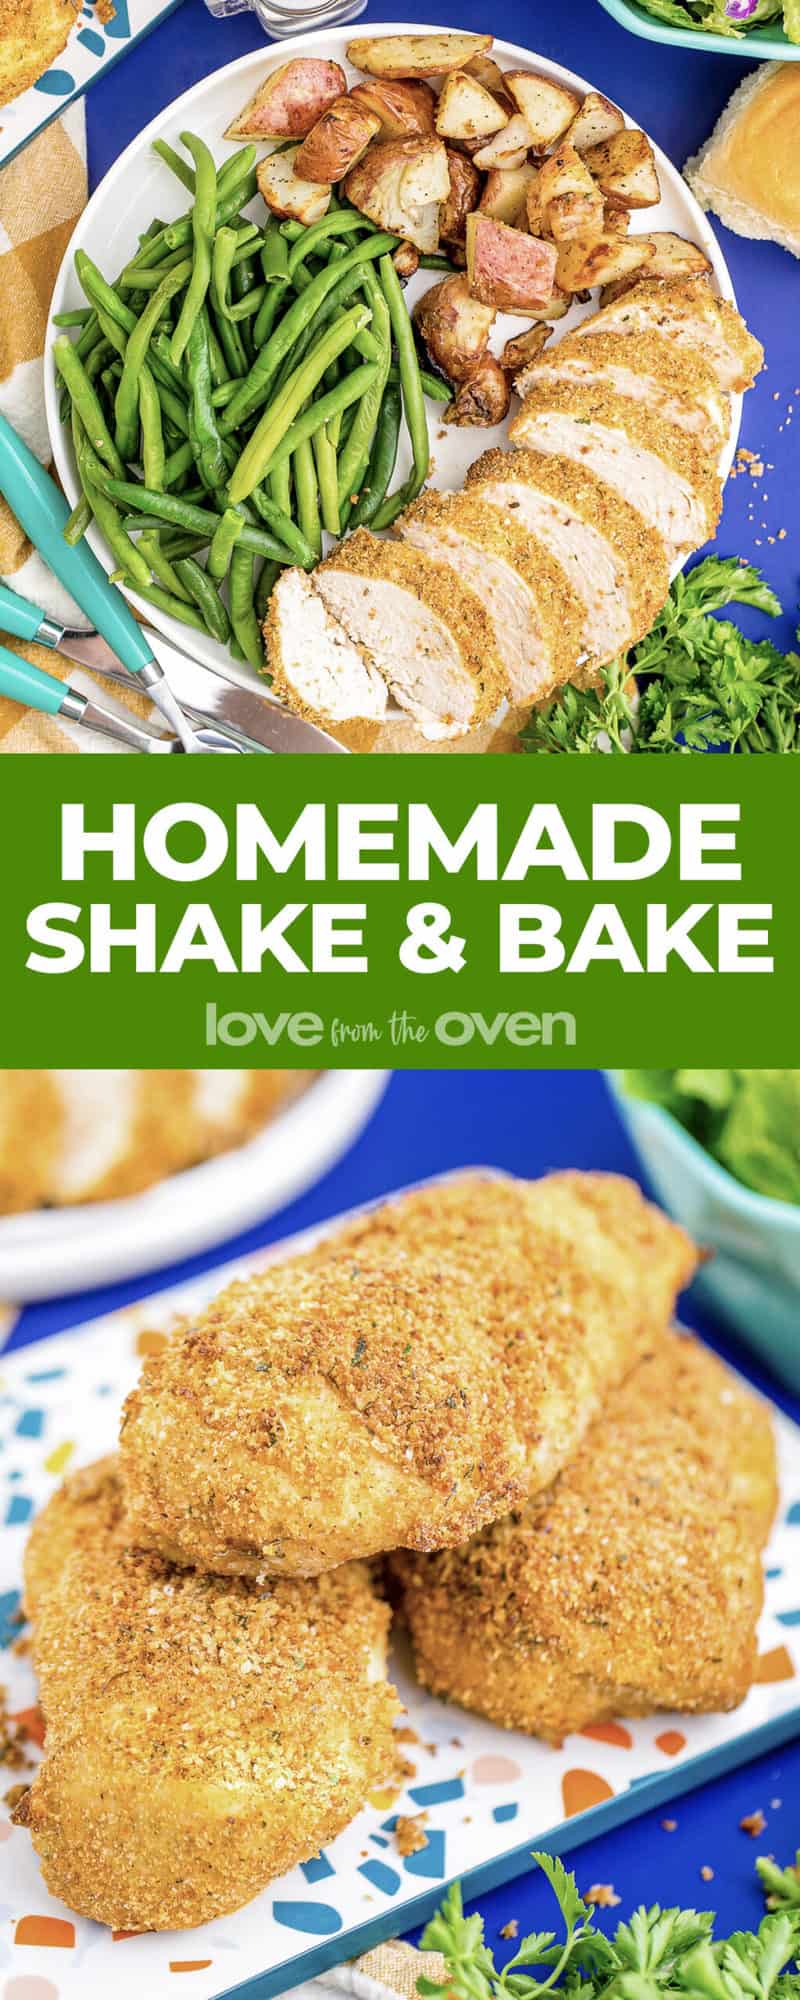 Homemade Shake and Bake - COOKtheSTORY